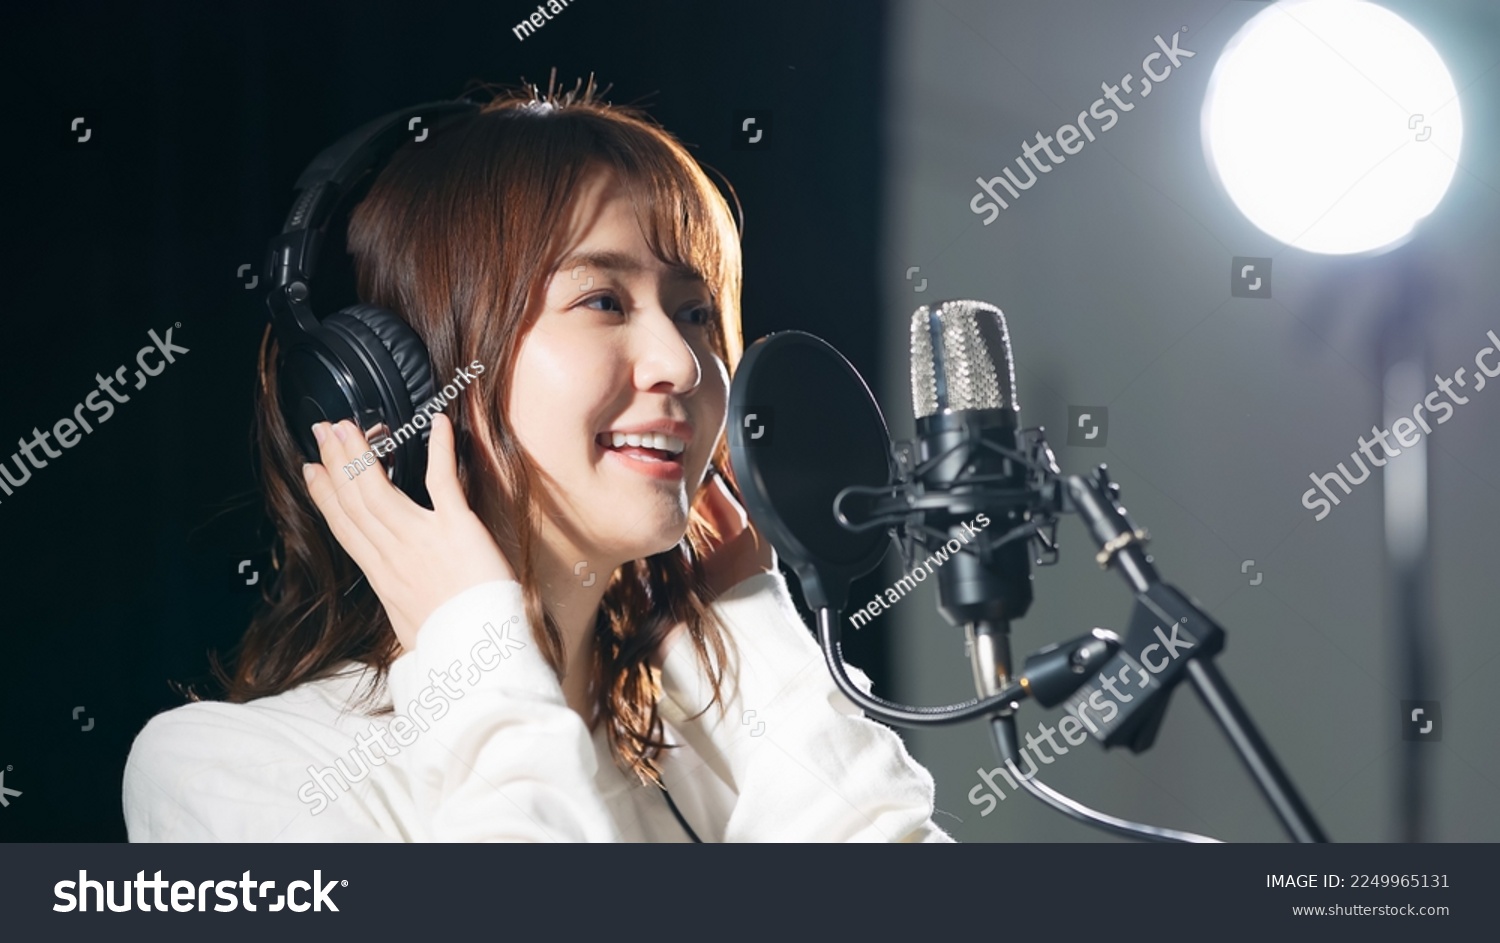 Female singer recording in studio. #2249965131